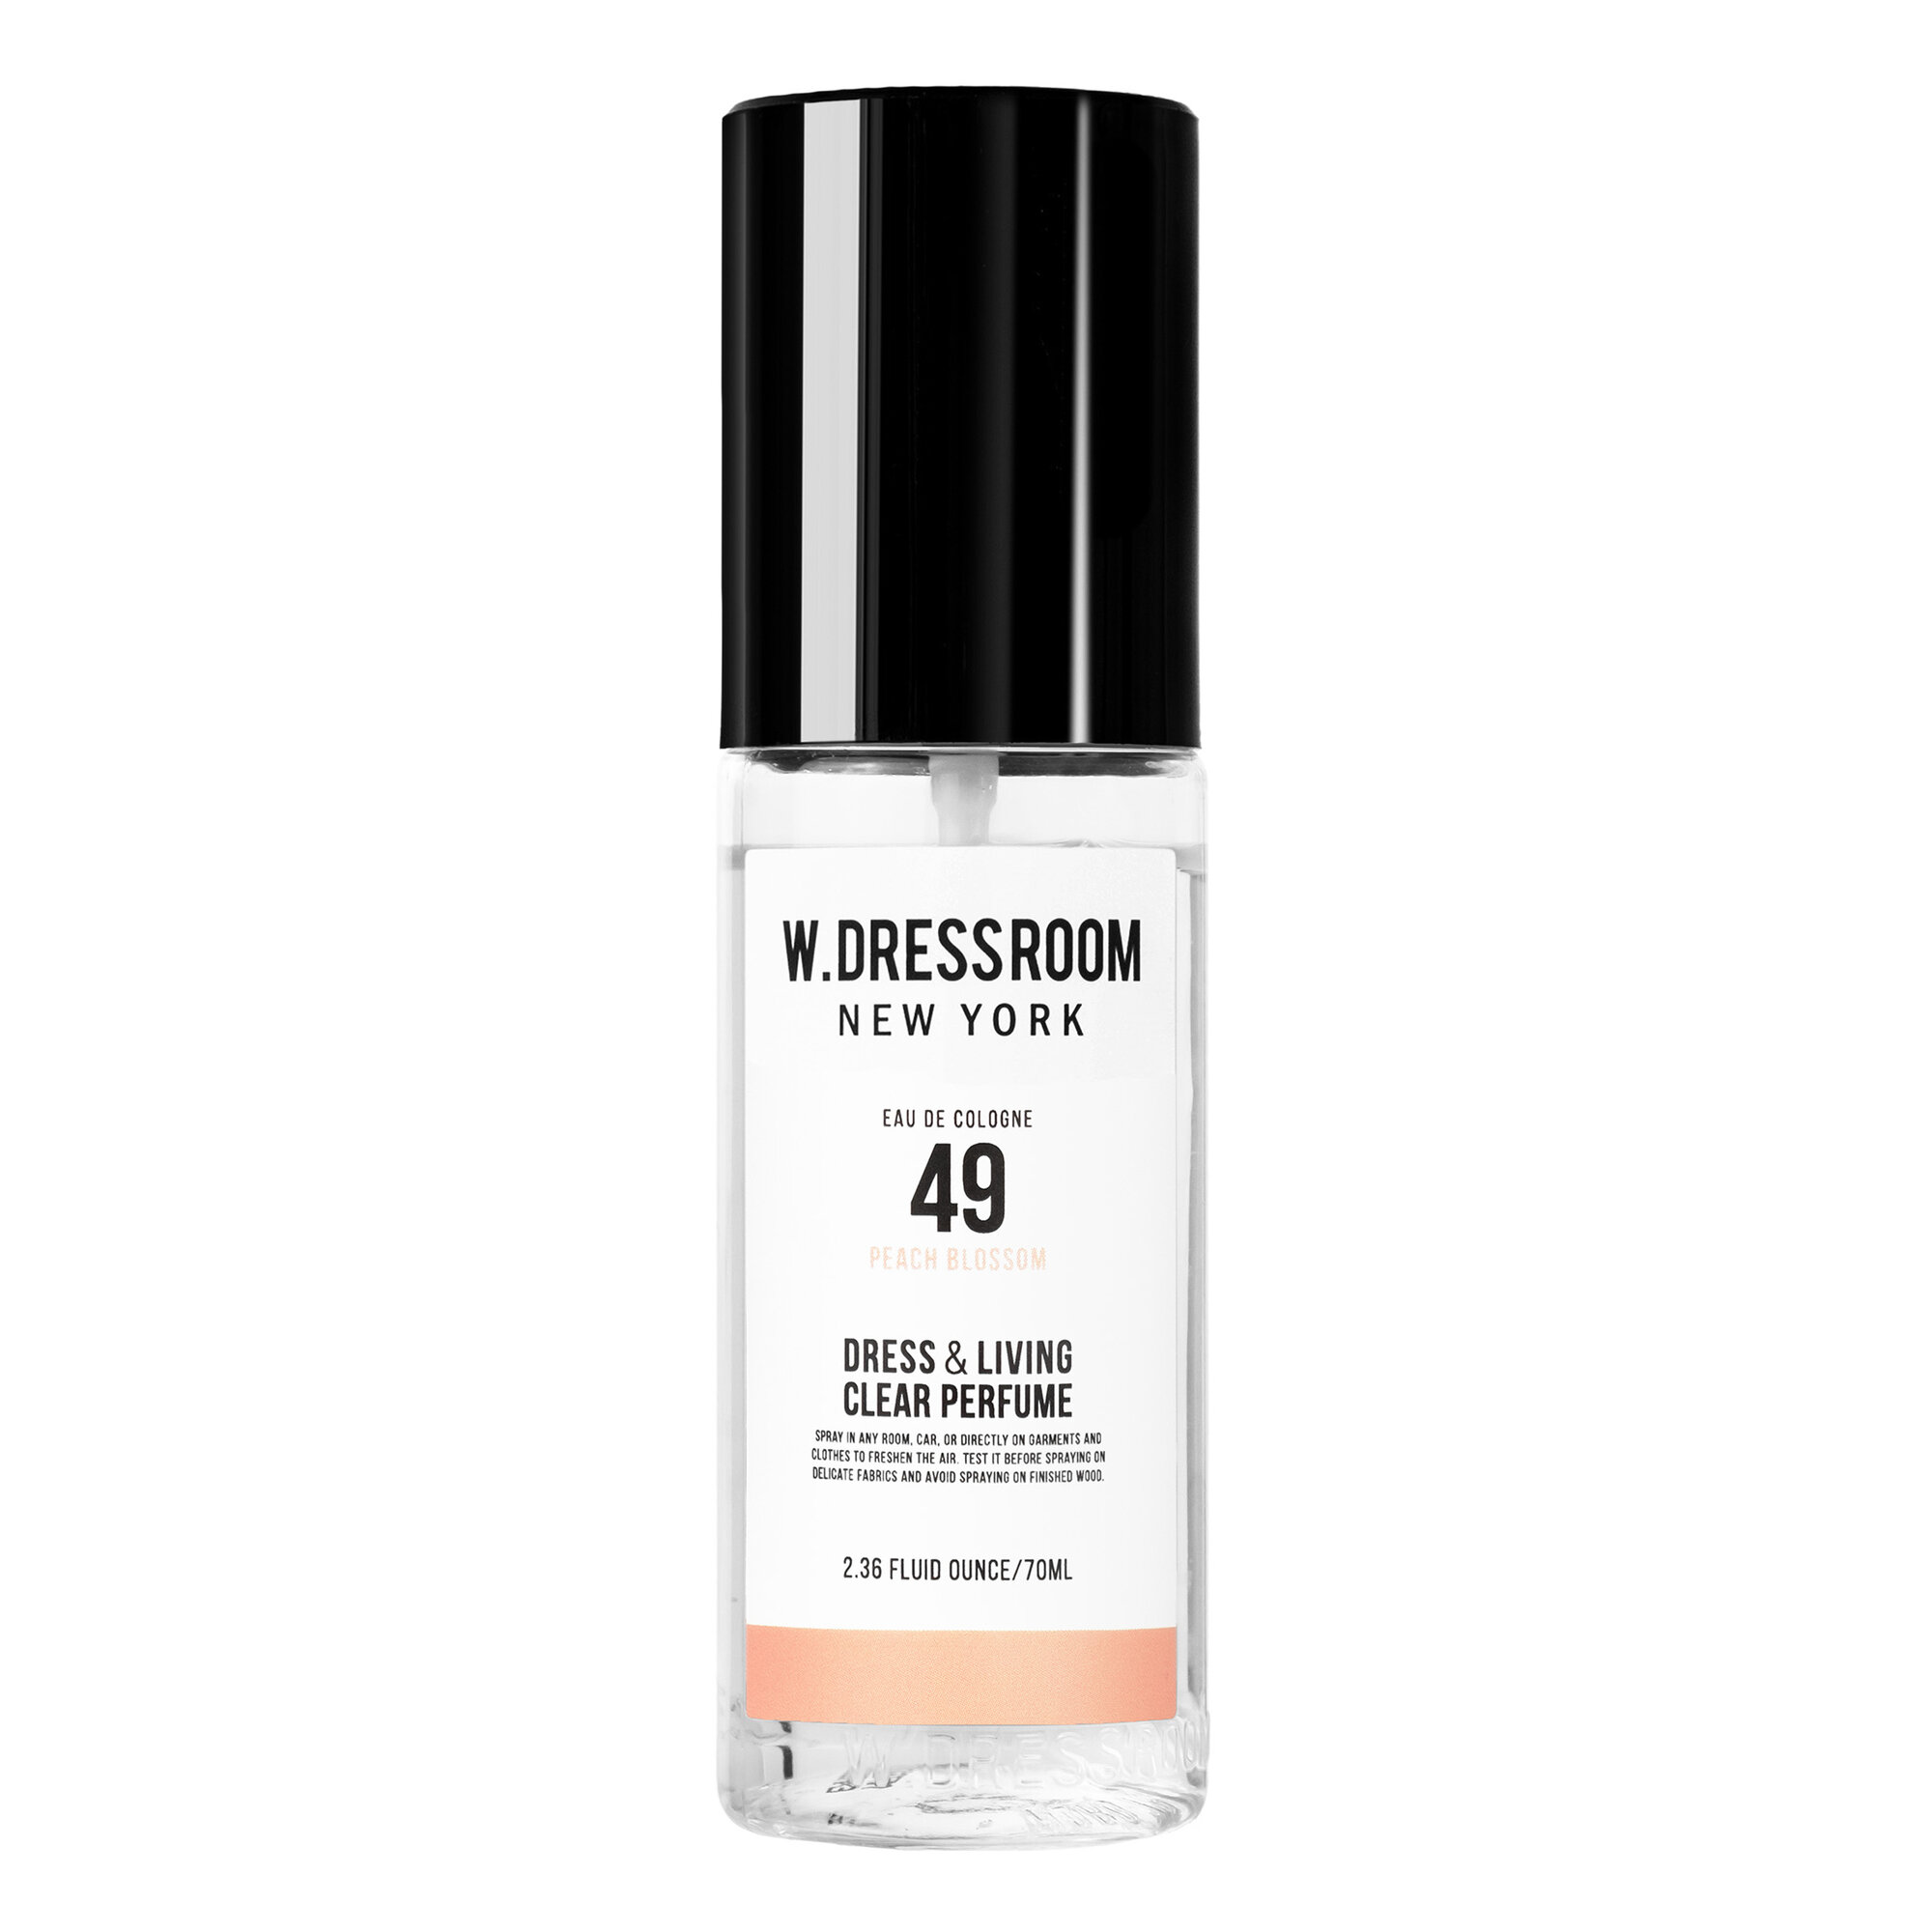 Парфюмированный спрей Dress & Living Clear Perfume No.49 Peach Blossom 70 ml W. Dressroom/ Спрей для одежды/ BTS